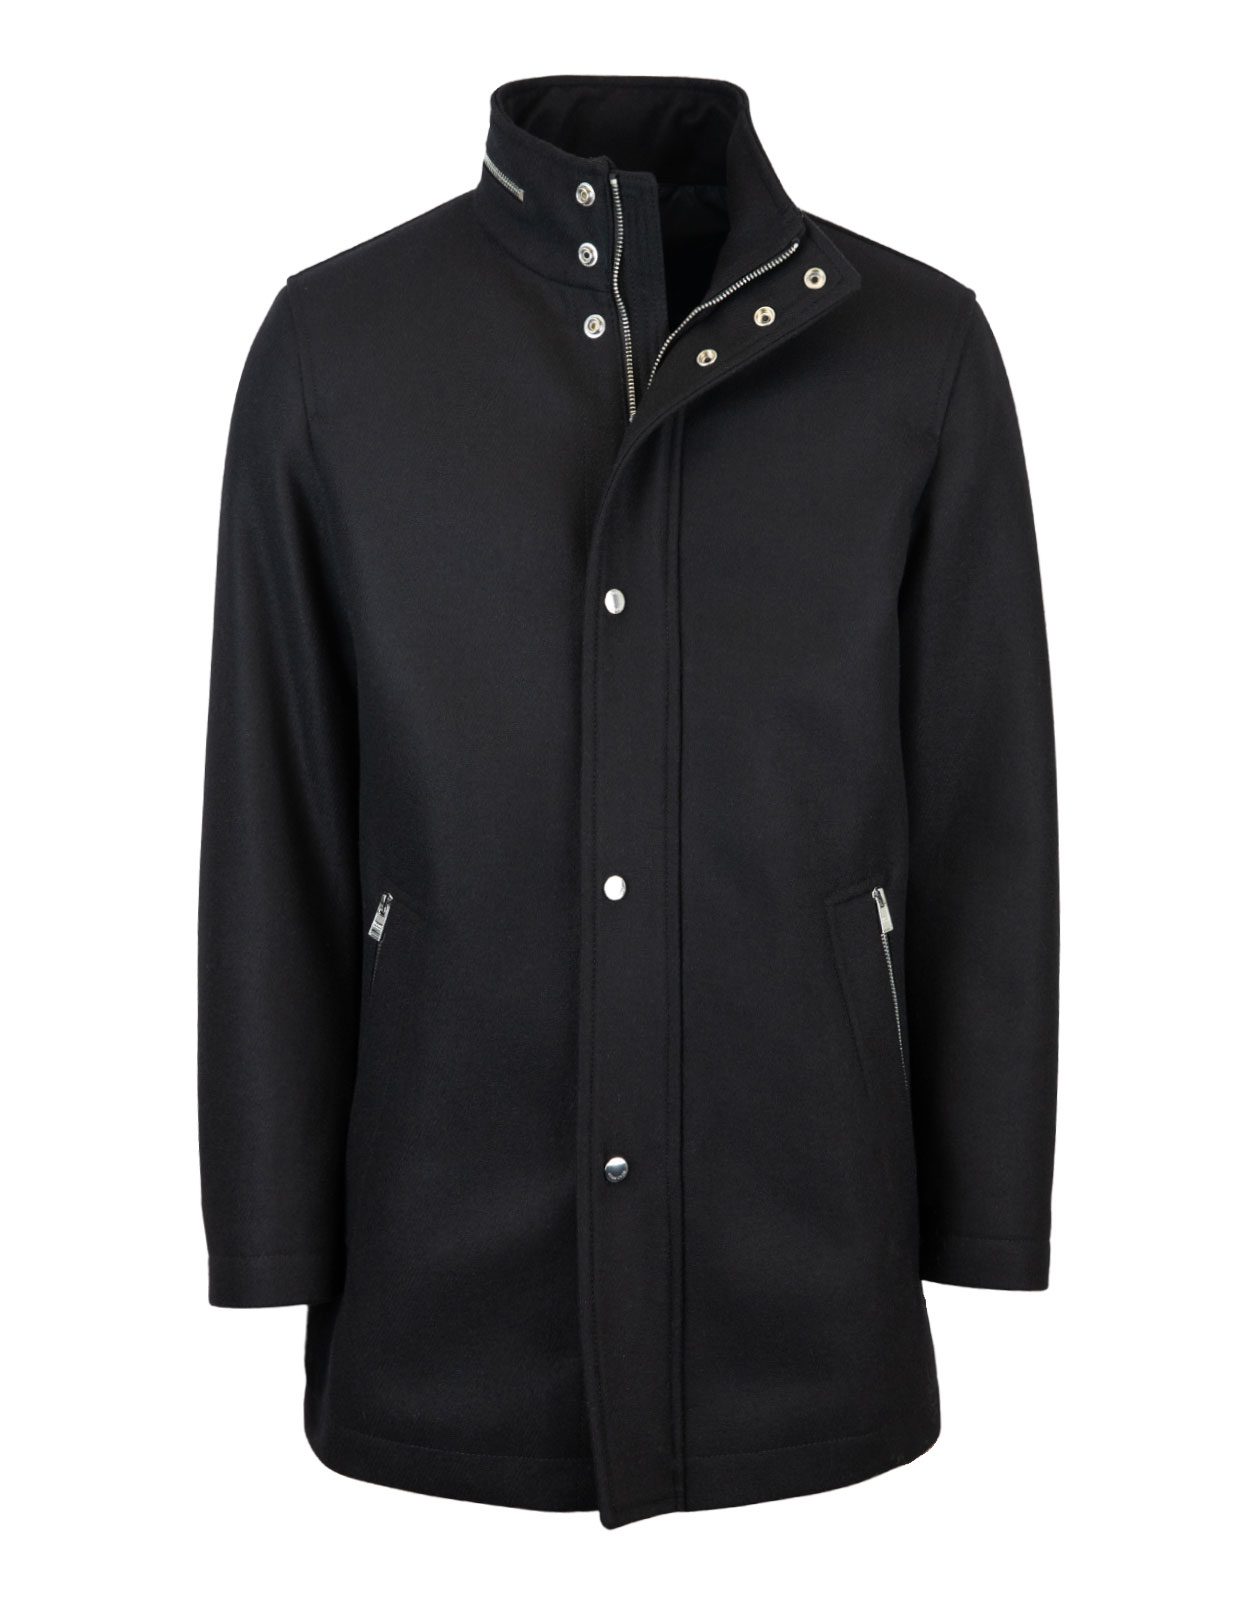 Camron4 Jacket Regular Fit Wool Blend Black